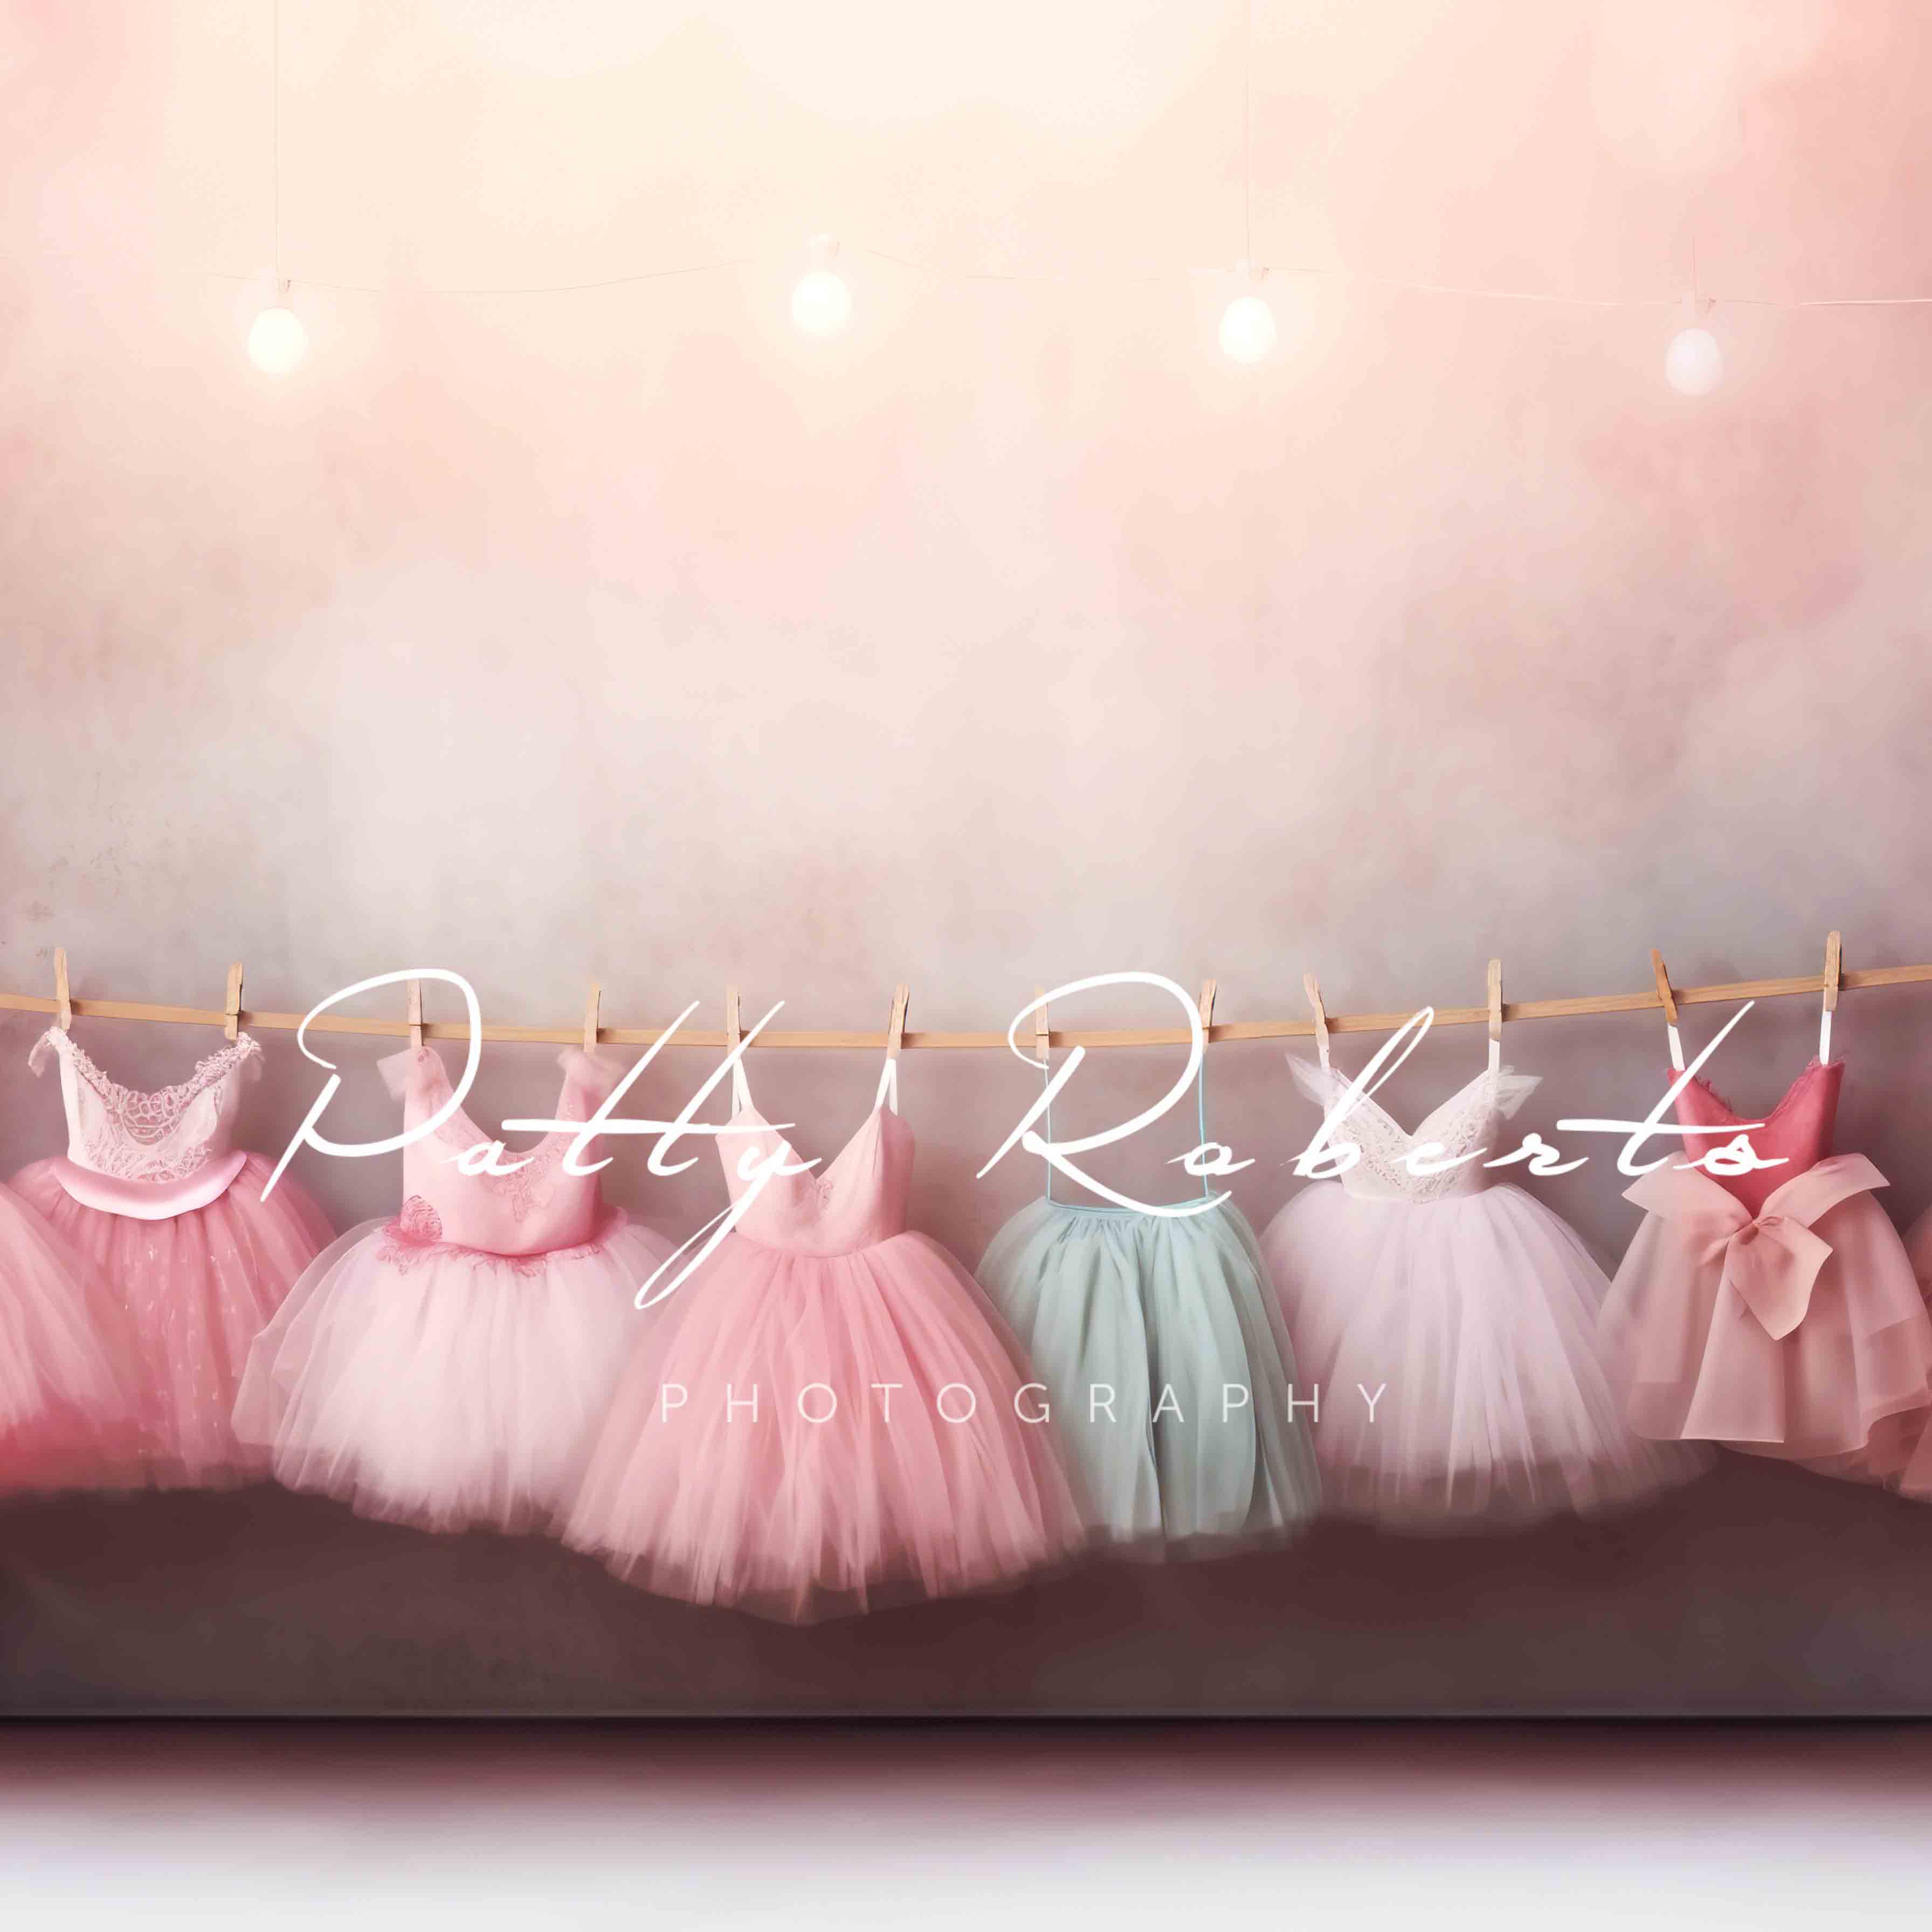 Kate Ballet Class Dresses Pink Backdrop Designed by Patty Robert